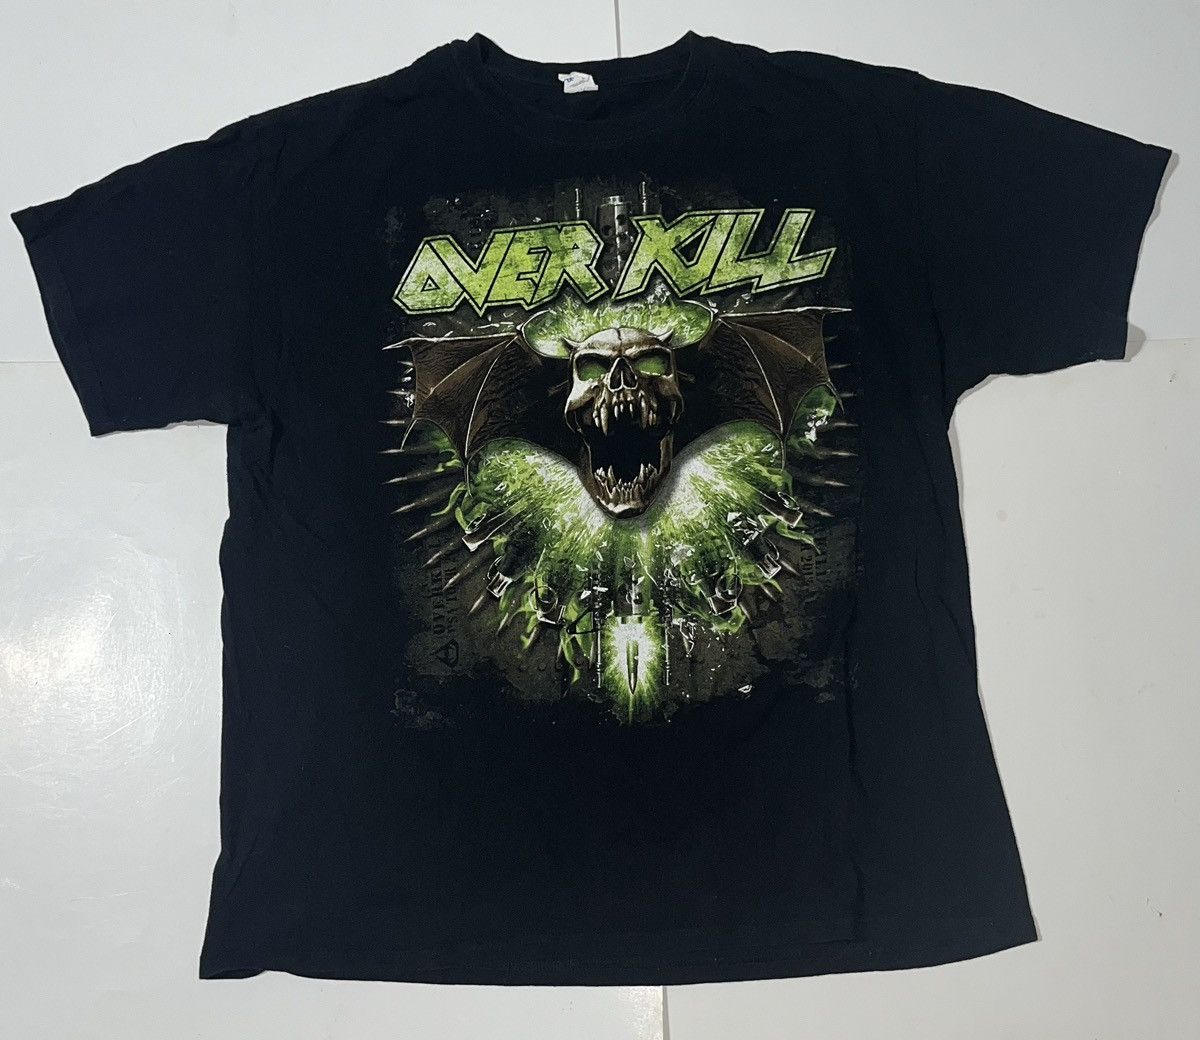 Band Tees Overkill 2013 Official Tour Shirt Size US XL / EU 56 / 4 - 1 Preview